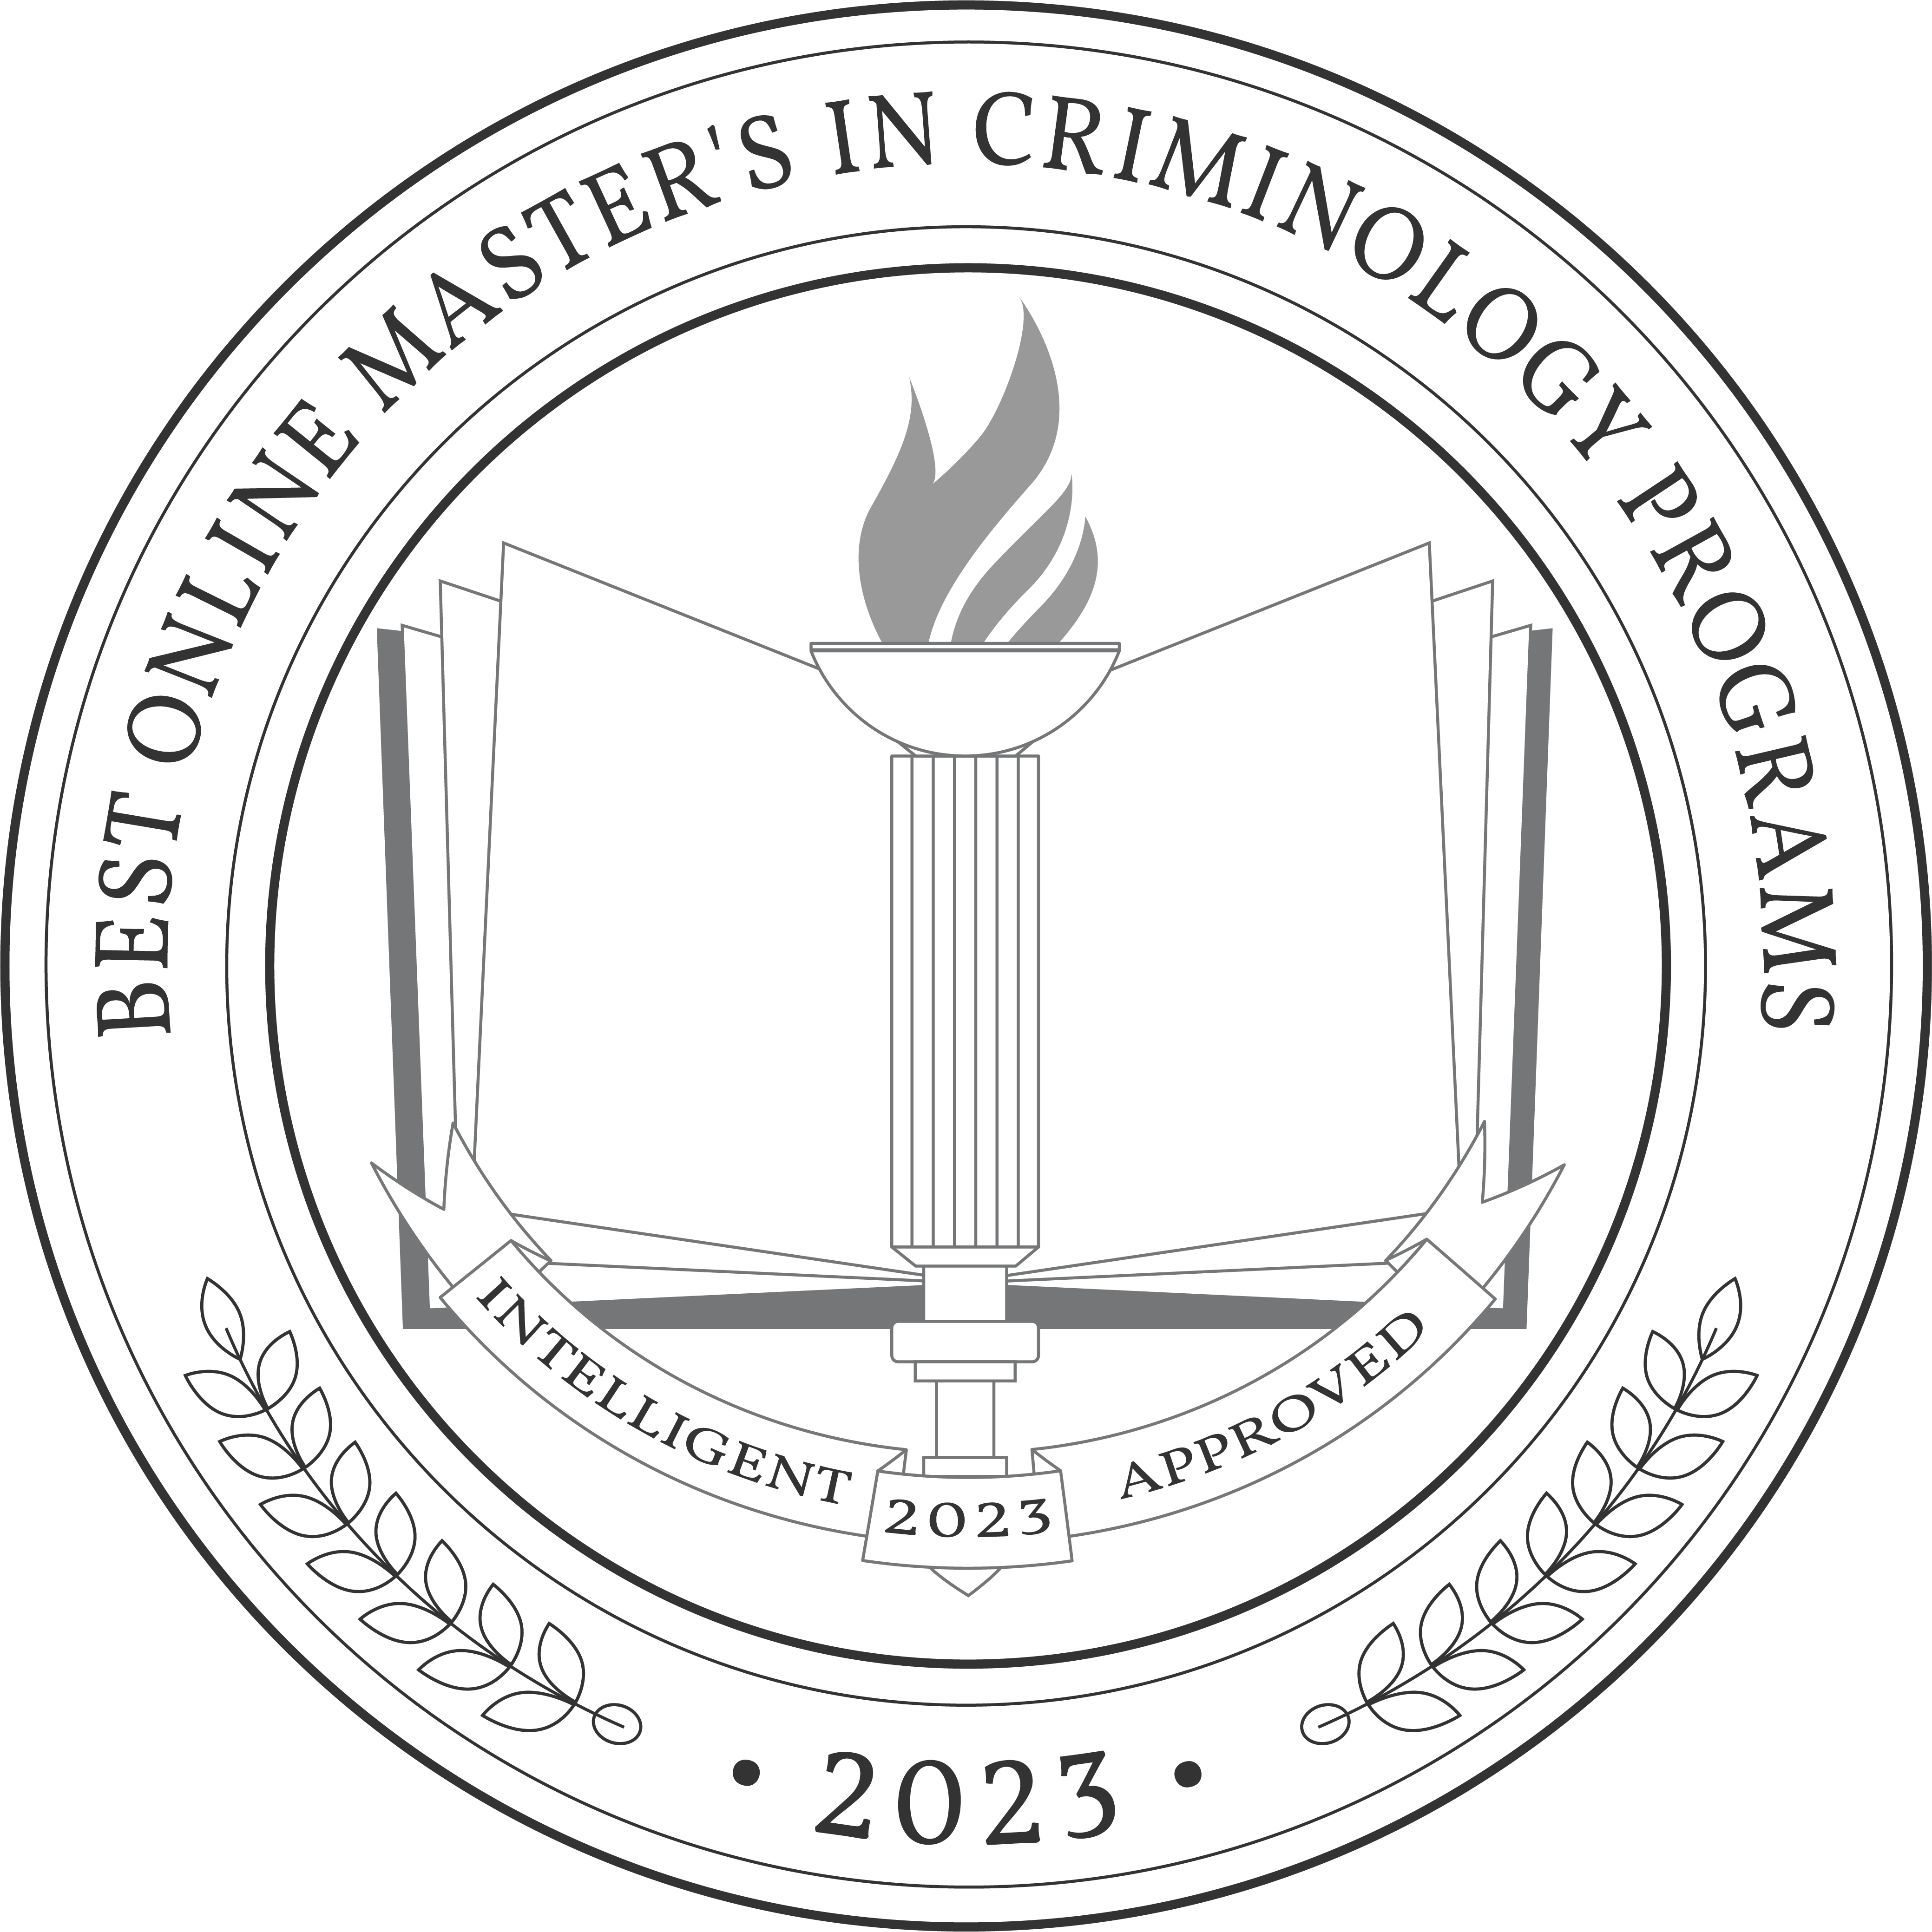 online criminology phd degree